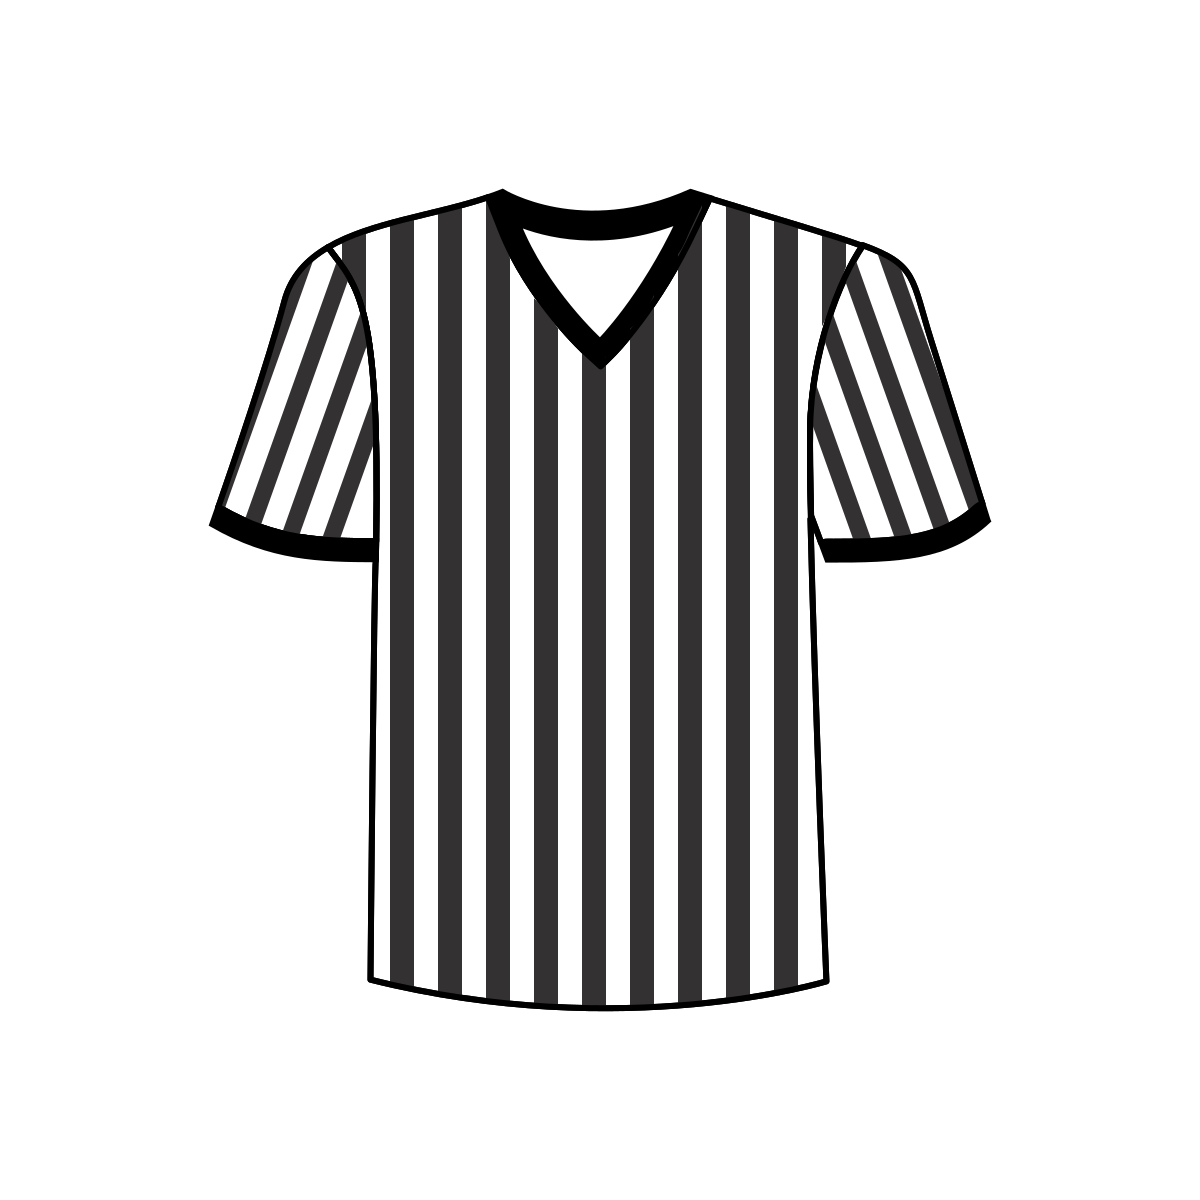 Download File:Football-referee-shirt.svg - Wikimedia Commons